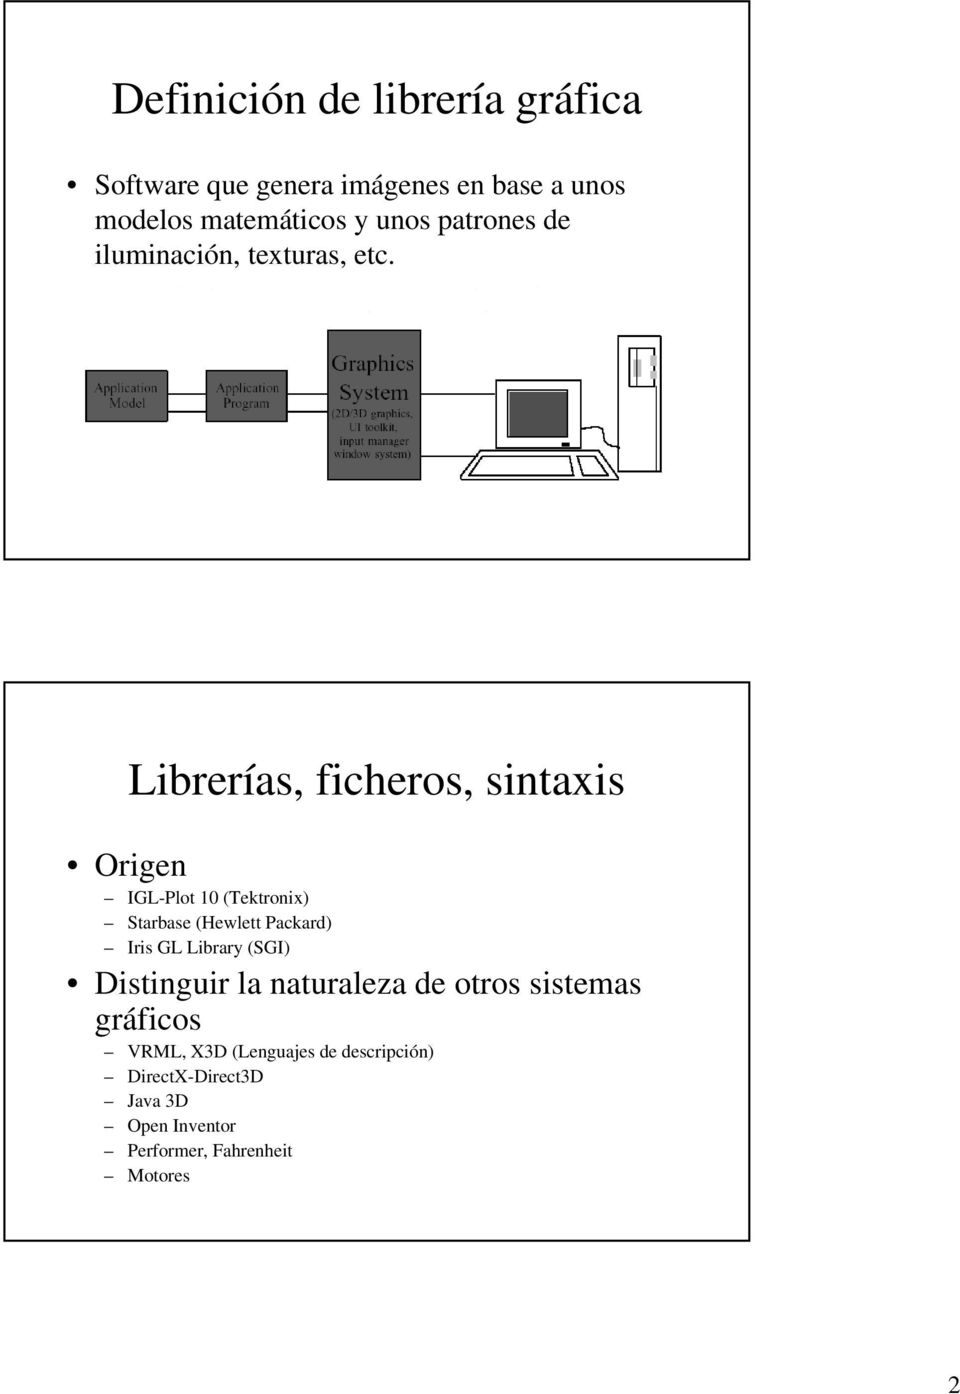 Librerías, ficheros, sintaxis Origen IGL-Plot 10 (Tektronix) Starbase (Hewlett Packard) Iris GL